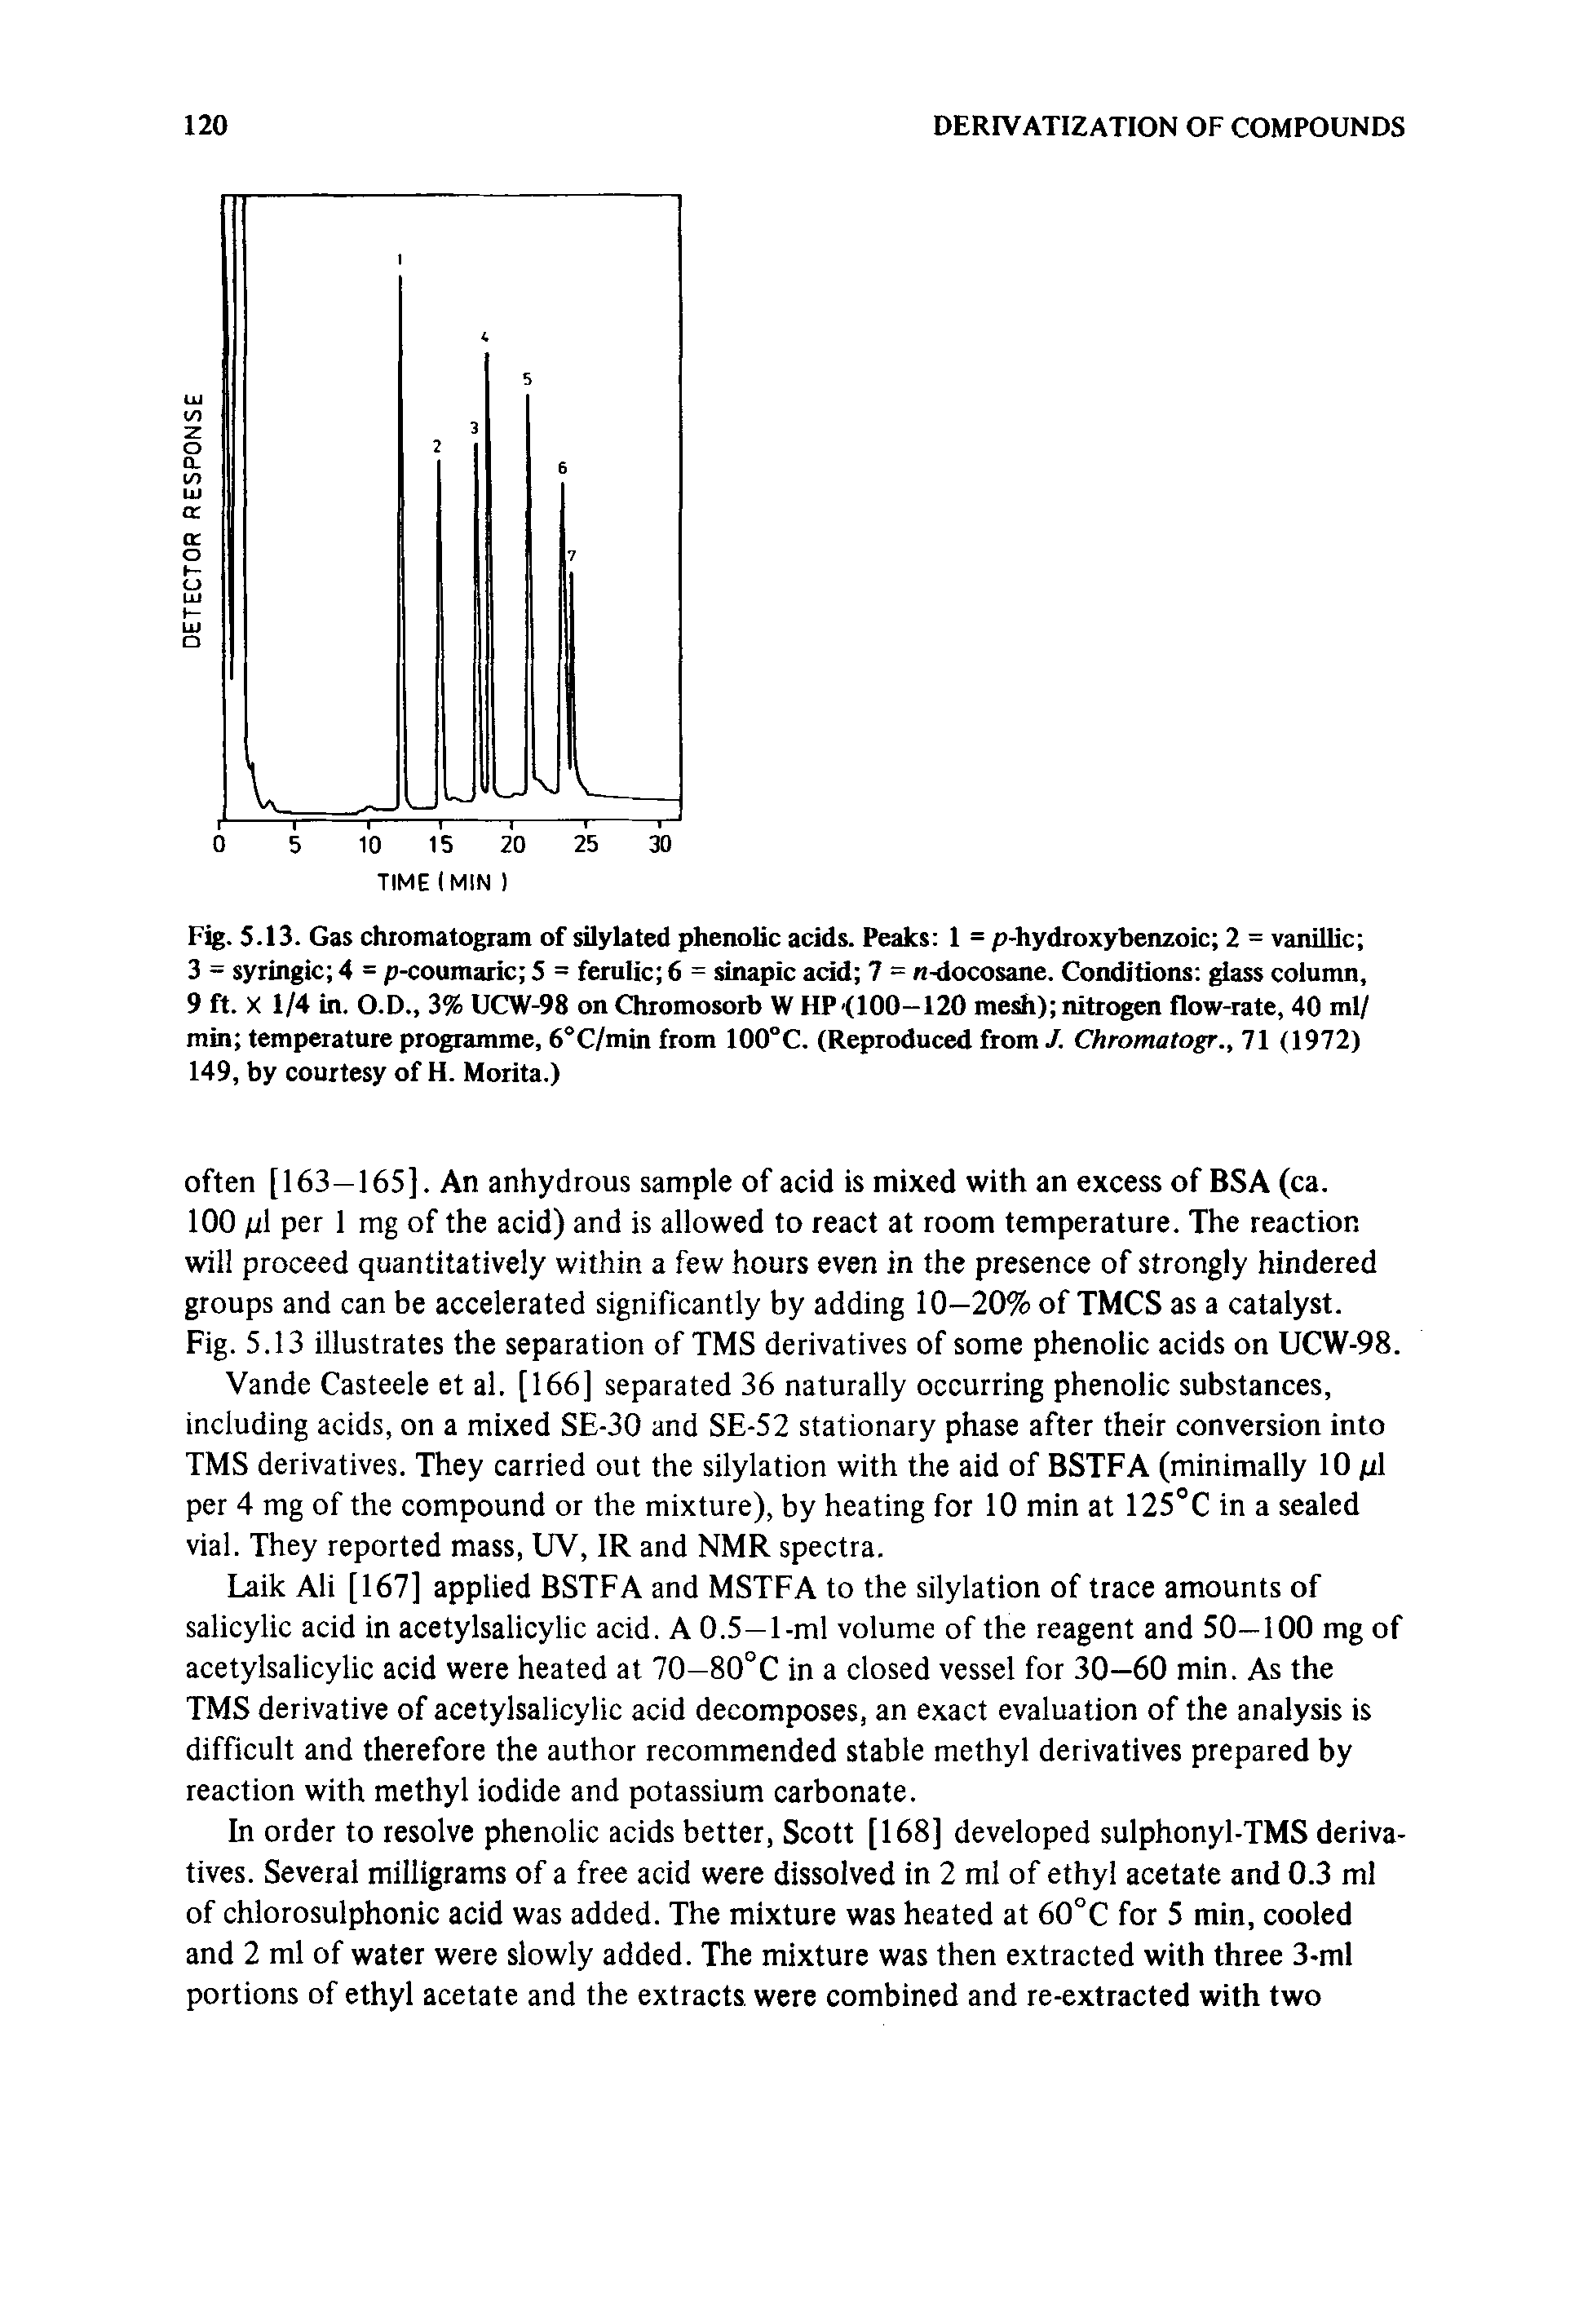 Fig. 5.13. Gas chromatogram of silylated phenolic acids. Peaks 1 = p-hydroxybenzoic 2 = vanillic 3 = syringic 4 = p-coumaric 5 = ferulic 6 = sinapic acid 7 = n-docosane. Conditions glass column, 9 ft. X 1/4 in. O.D., 3% UCW-98 on Chromosorb W HP<100-120 mesh) nitrogen flow-rate, 40 ml/ min temperature programme, 6°C/min from 100°C. (Reproduced from J. Chromatogr., 71 (1972) 149, by courtesy of H. Morita.)...